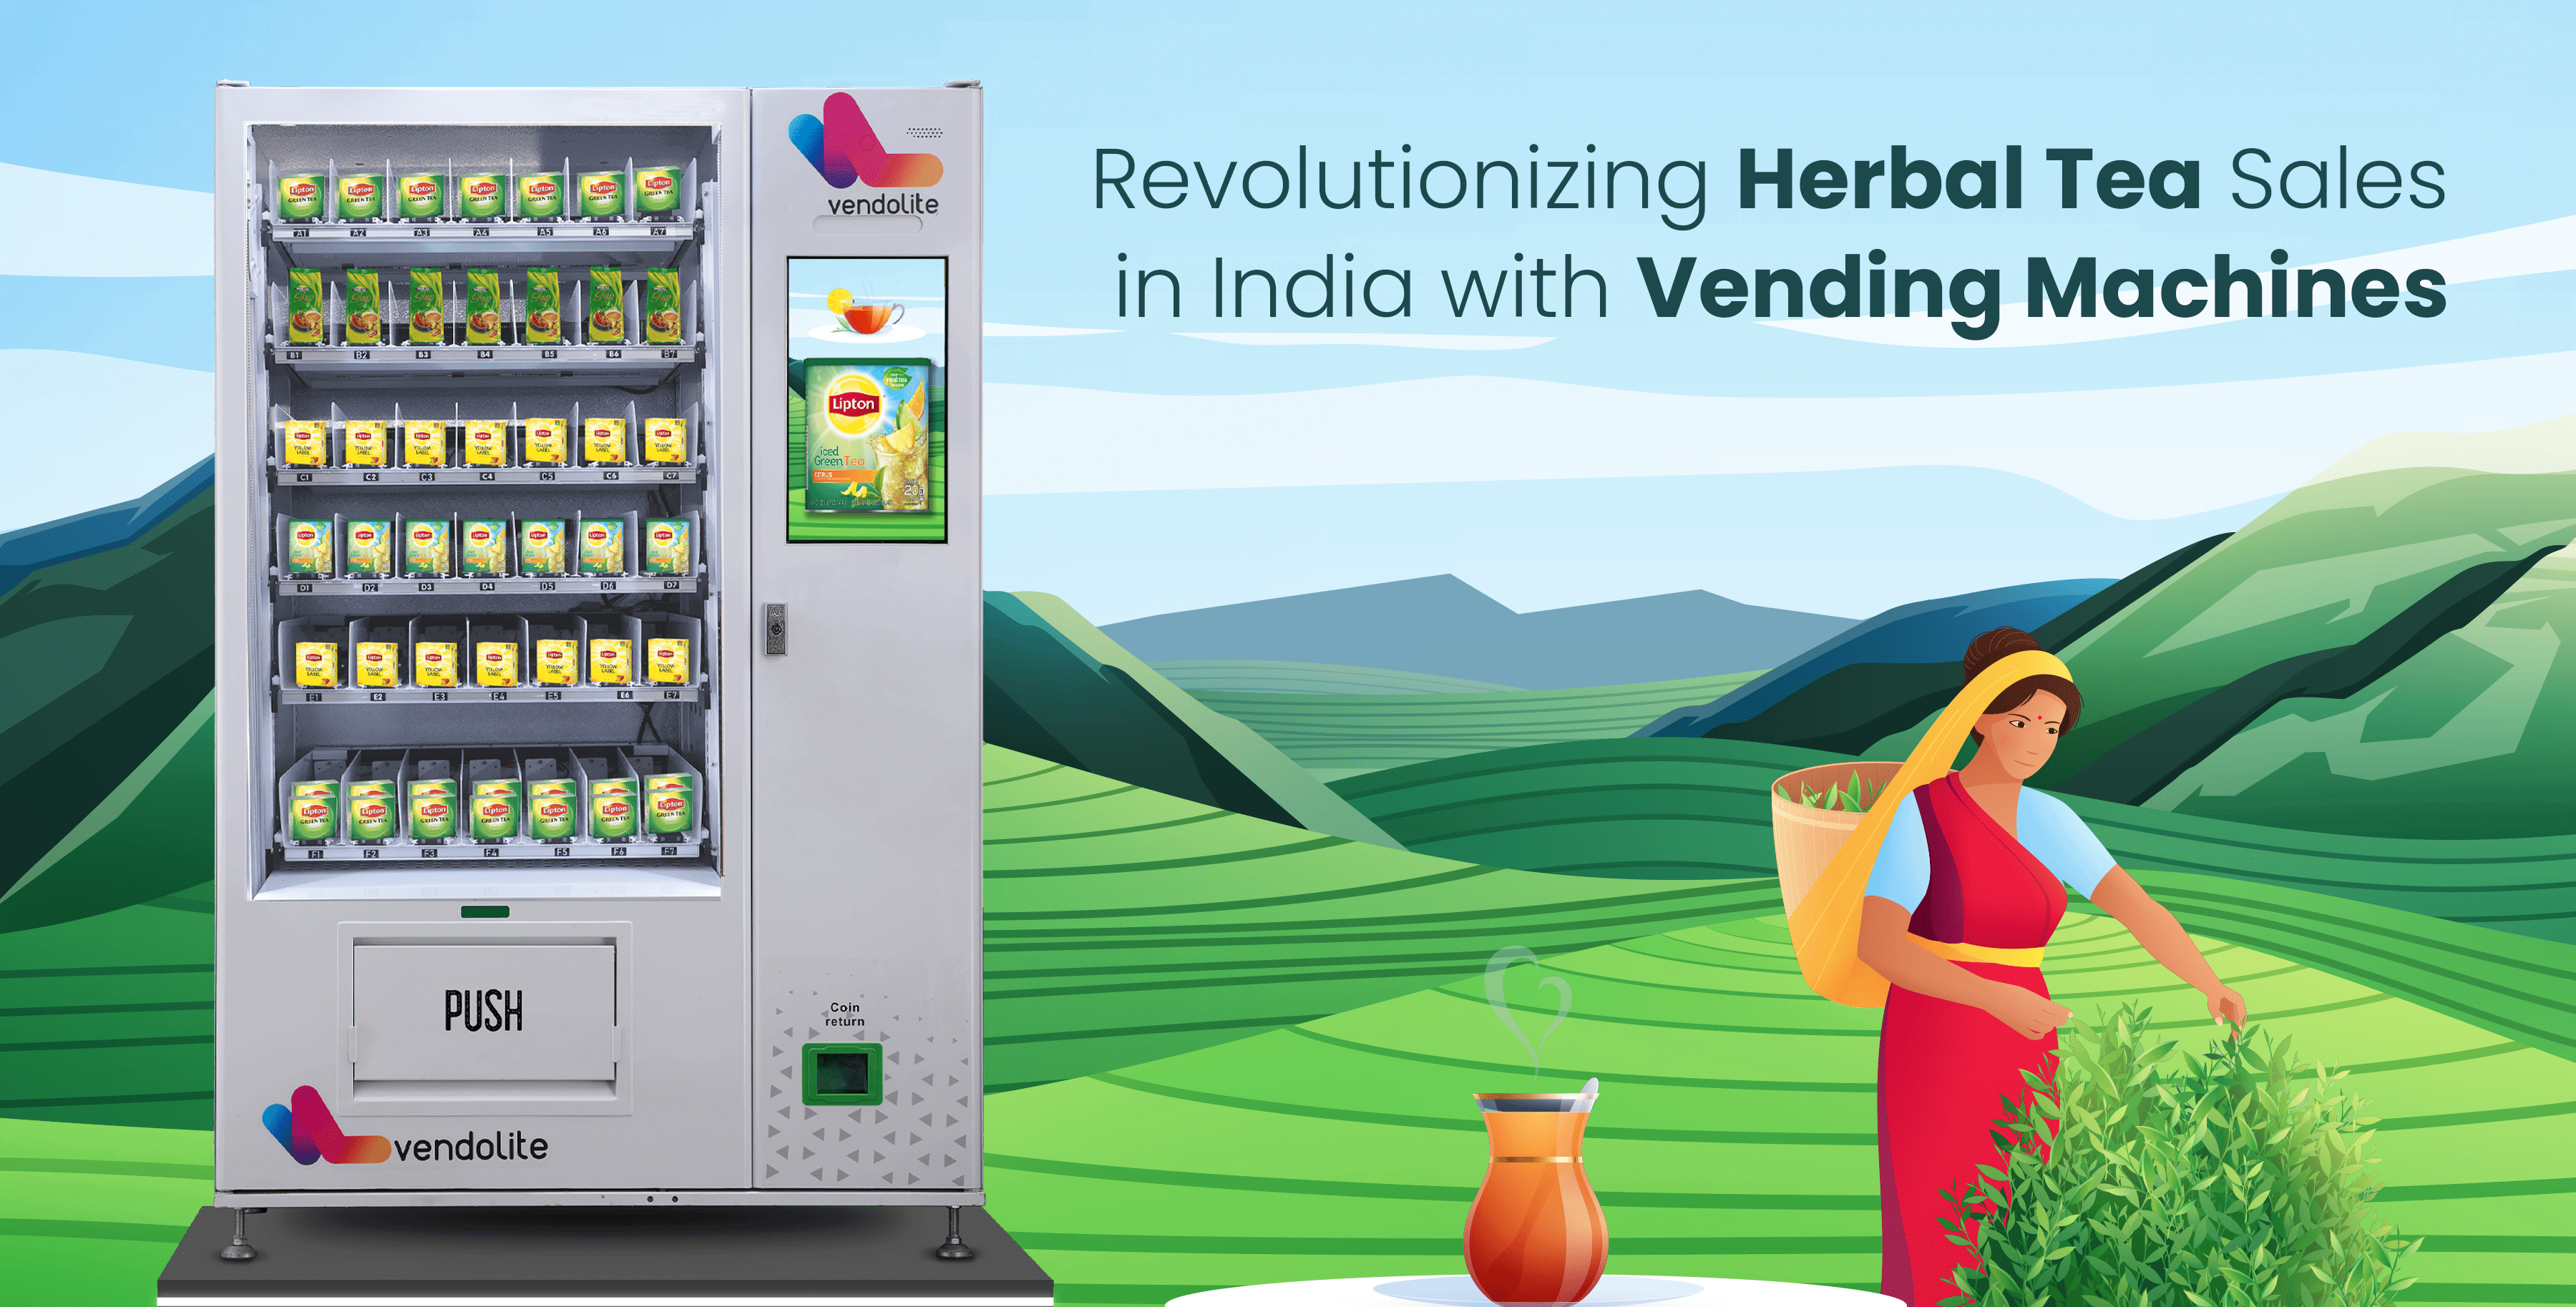 Herbal Tea Sales in India with Vending Machines